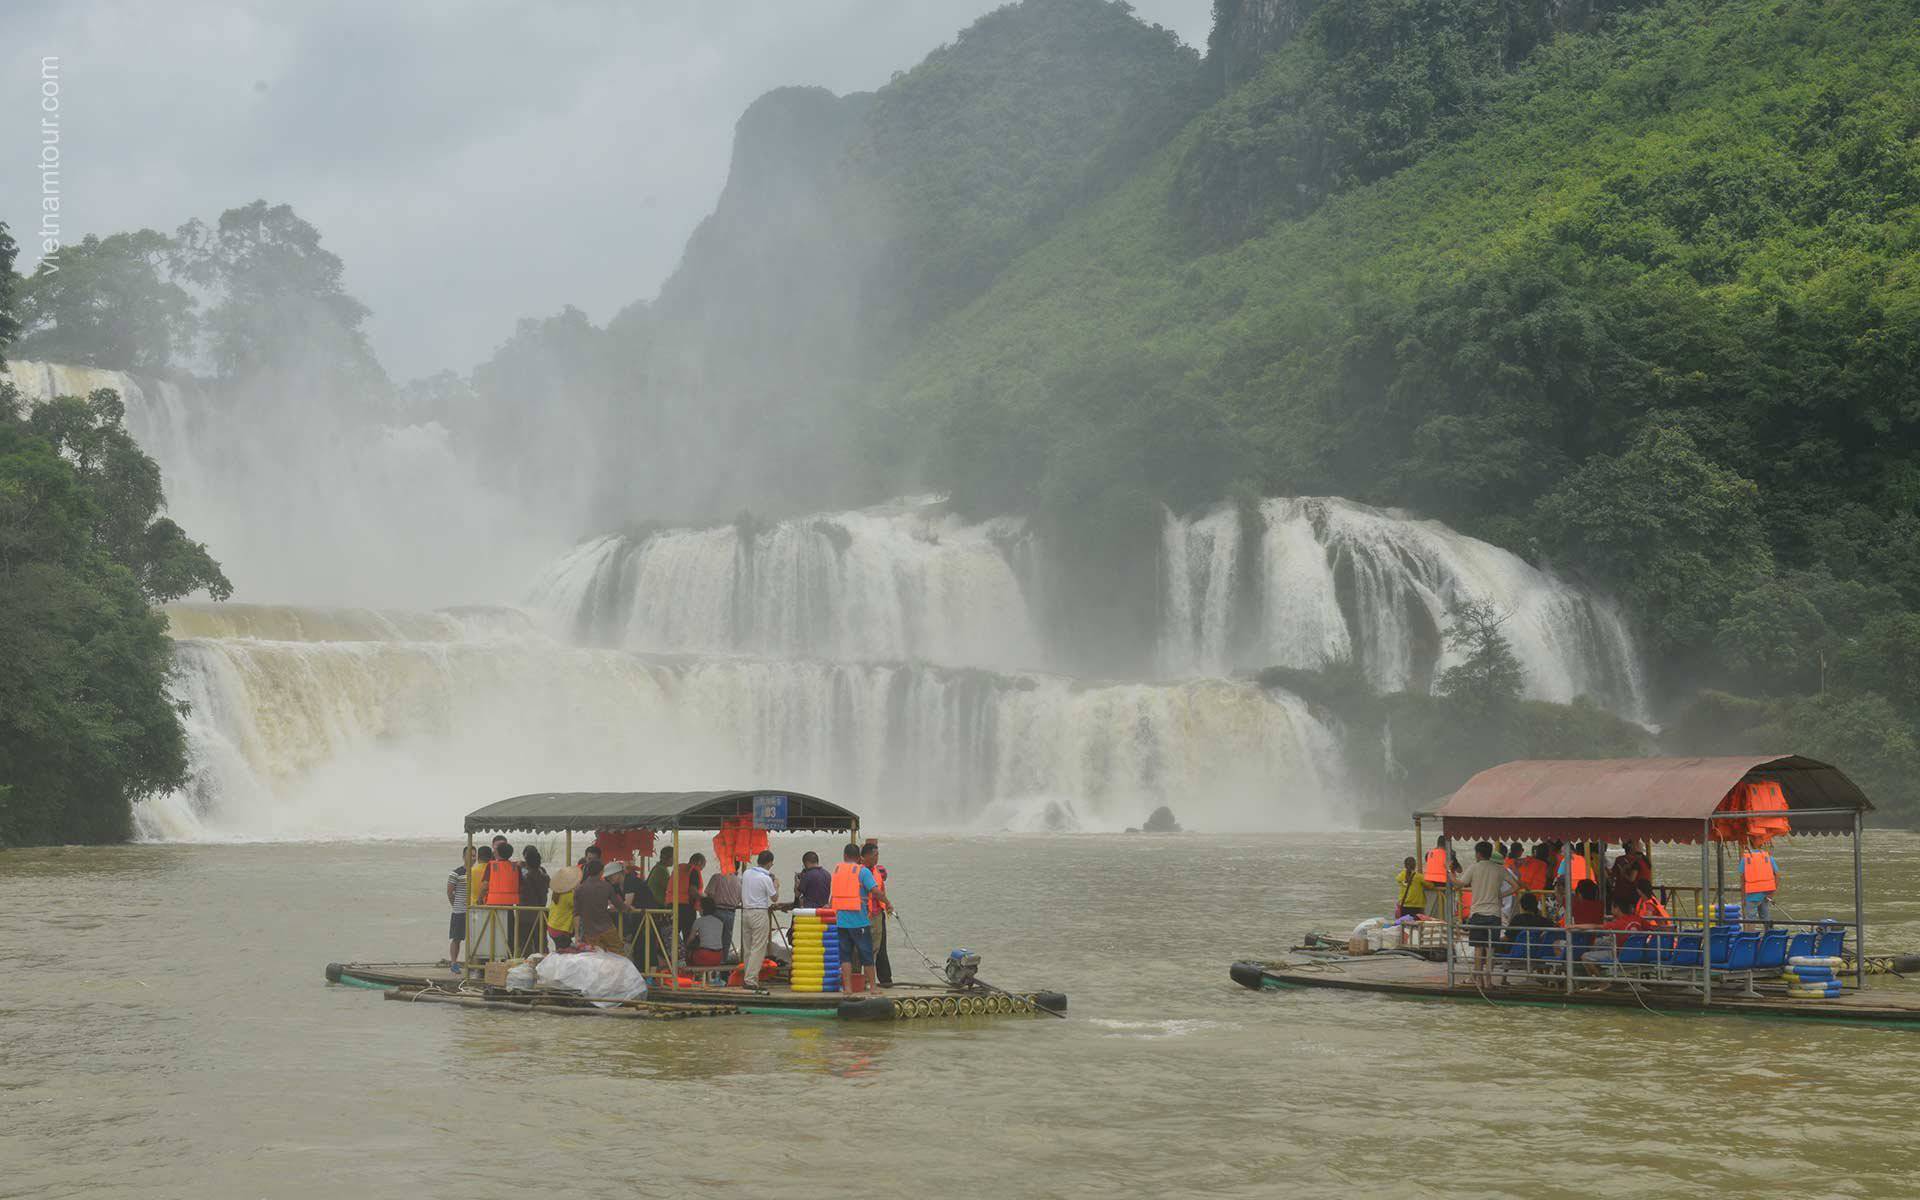 Visit Waterfalls in Cao Bang